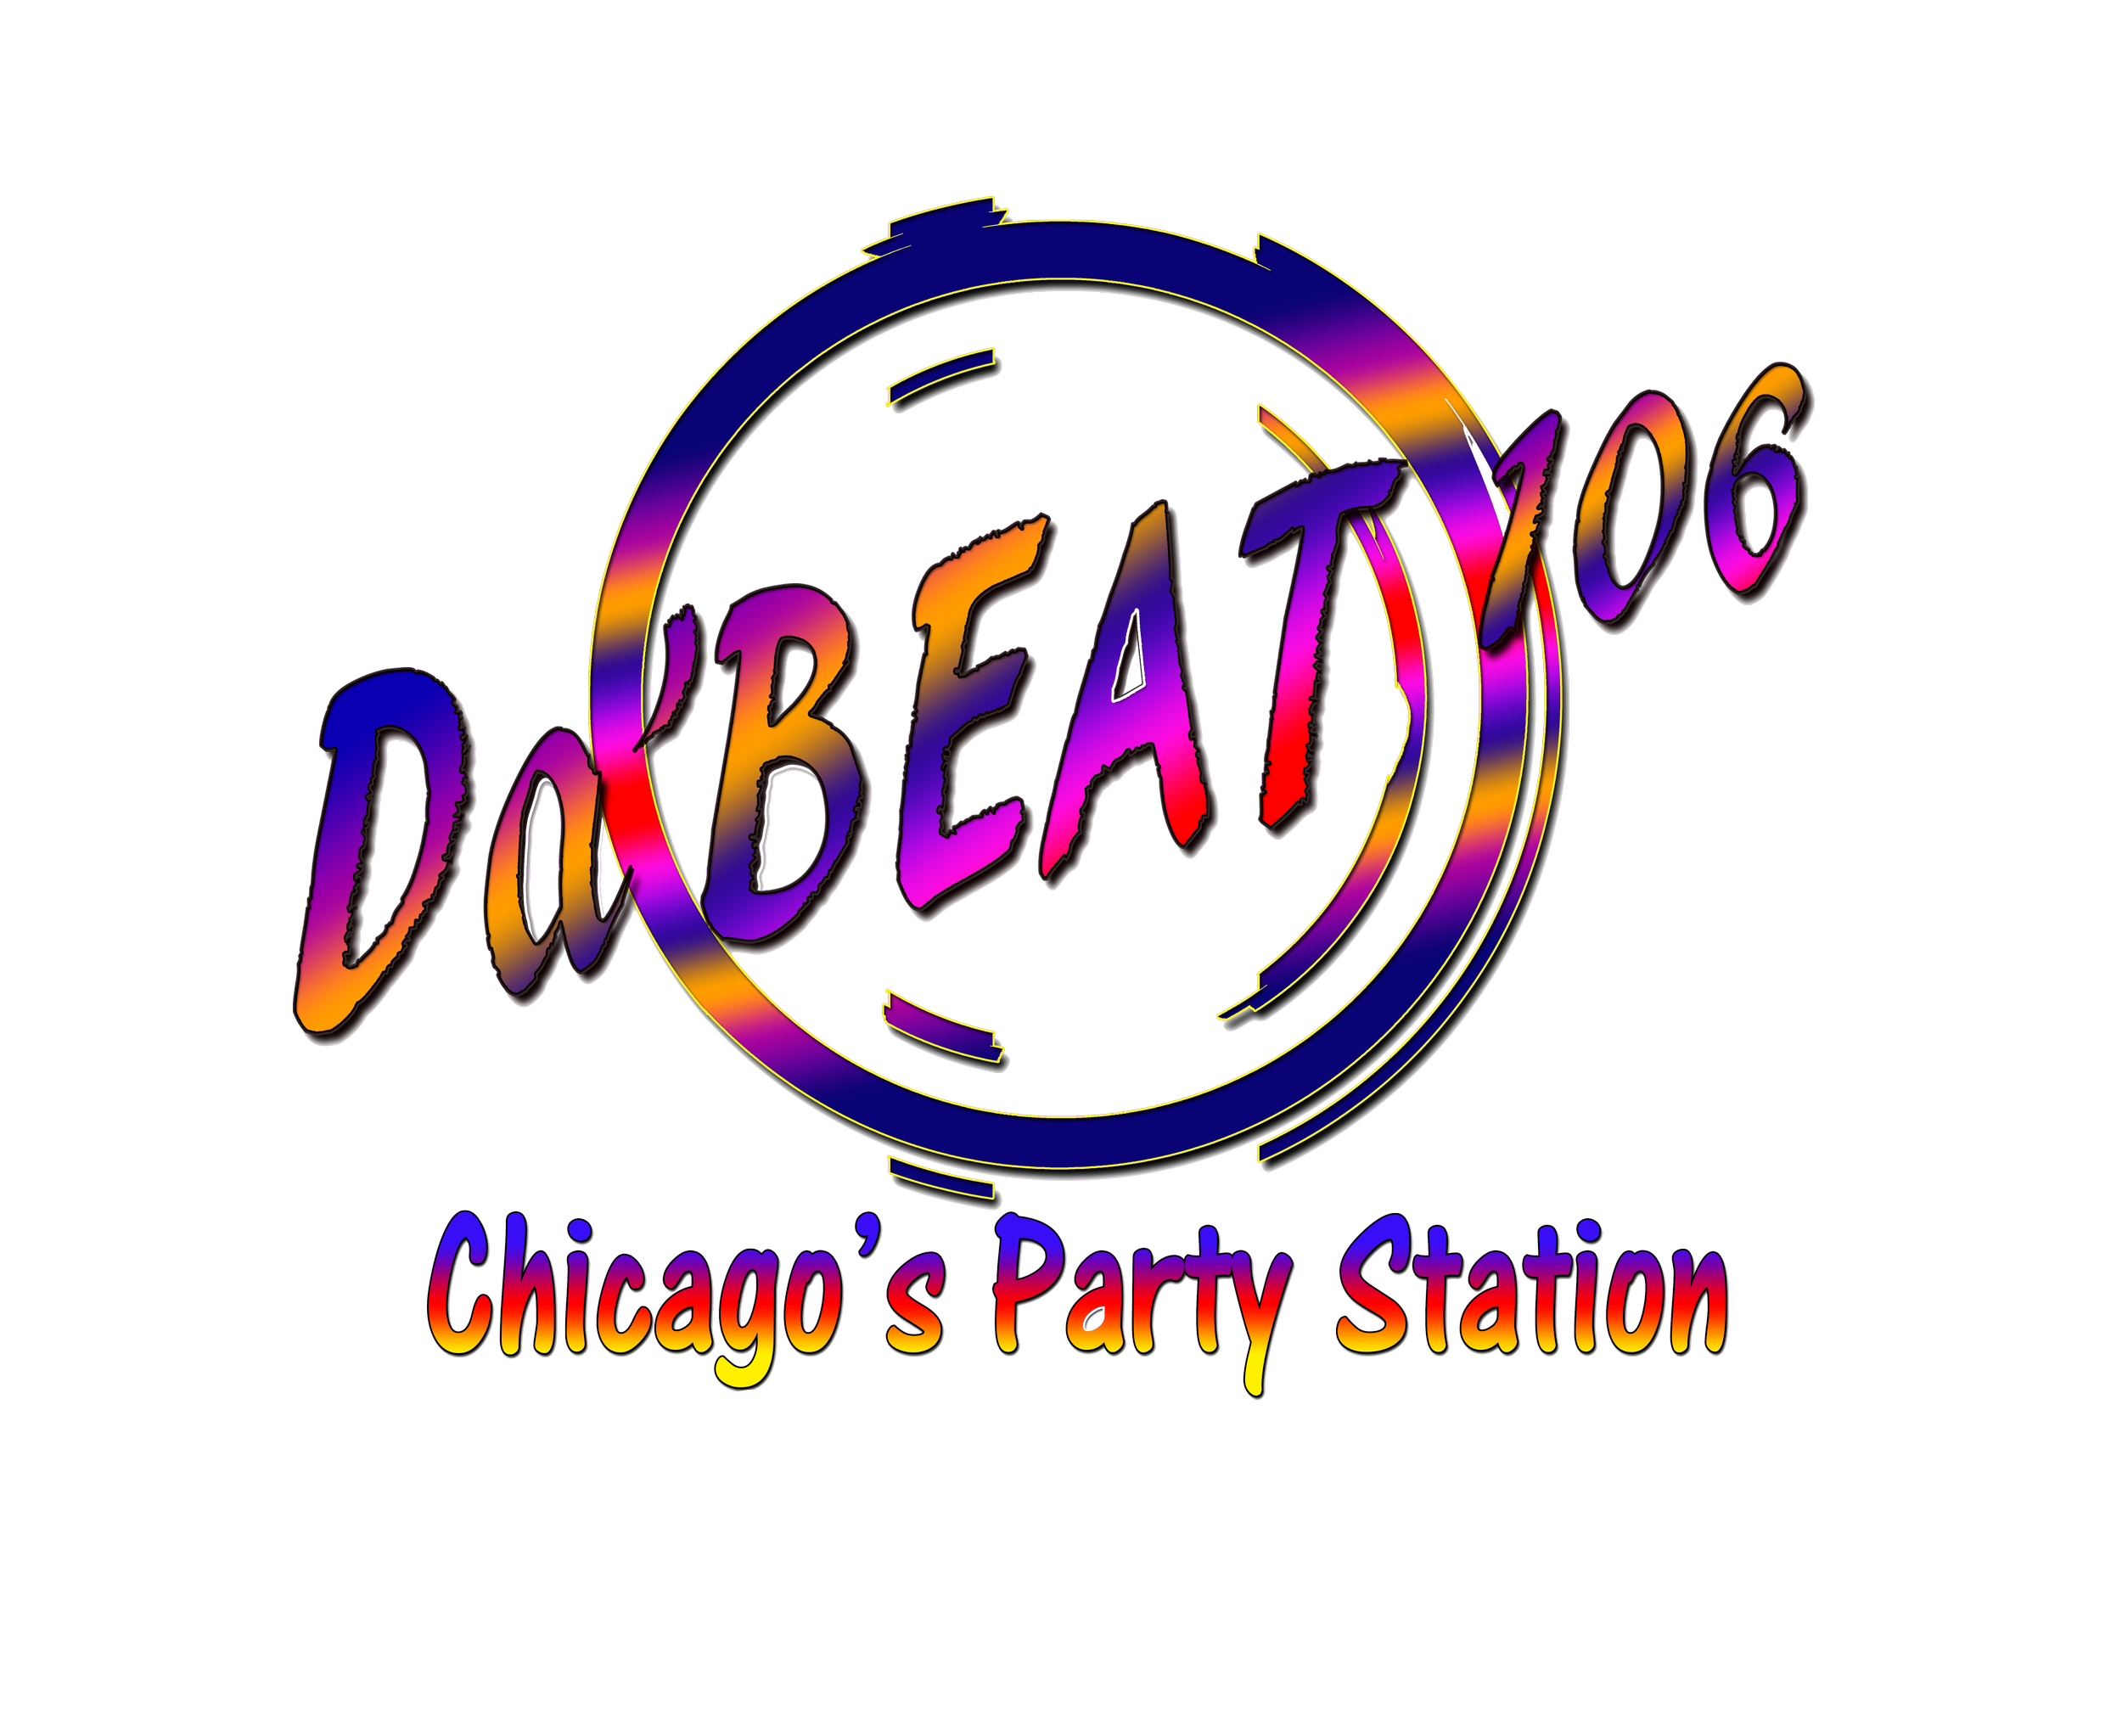  DaBeat106 Chicago